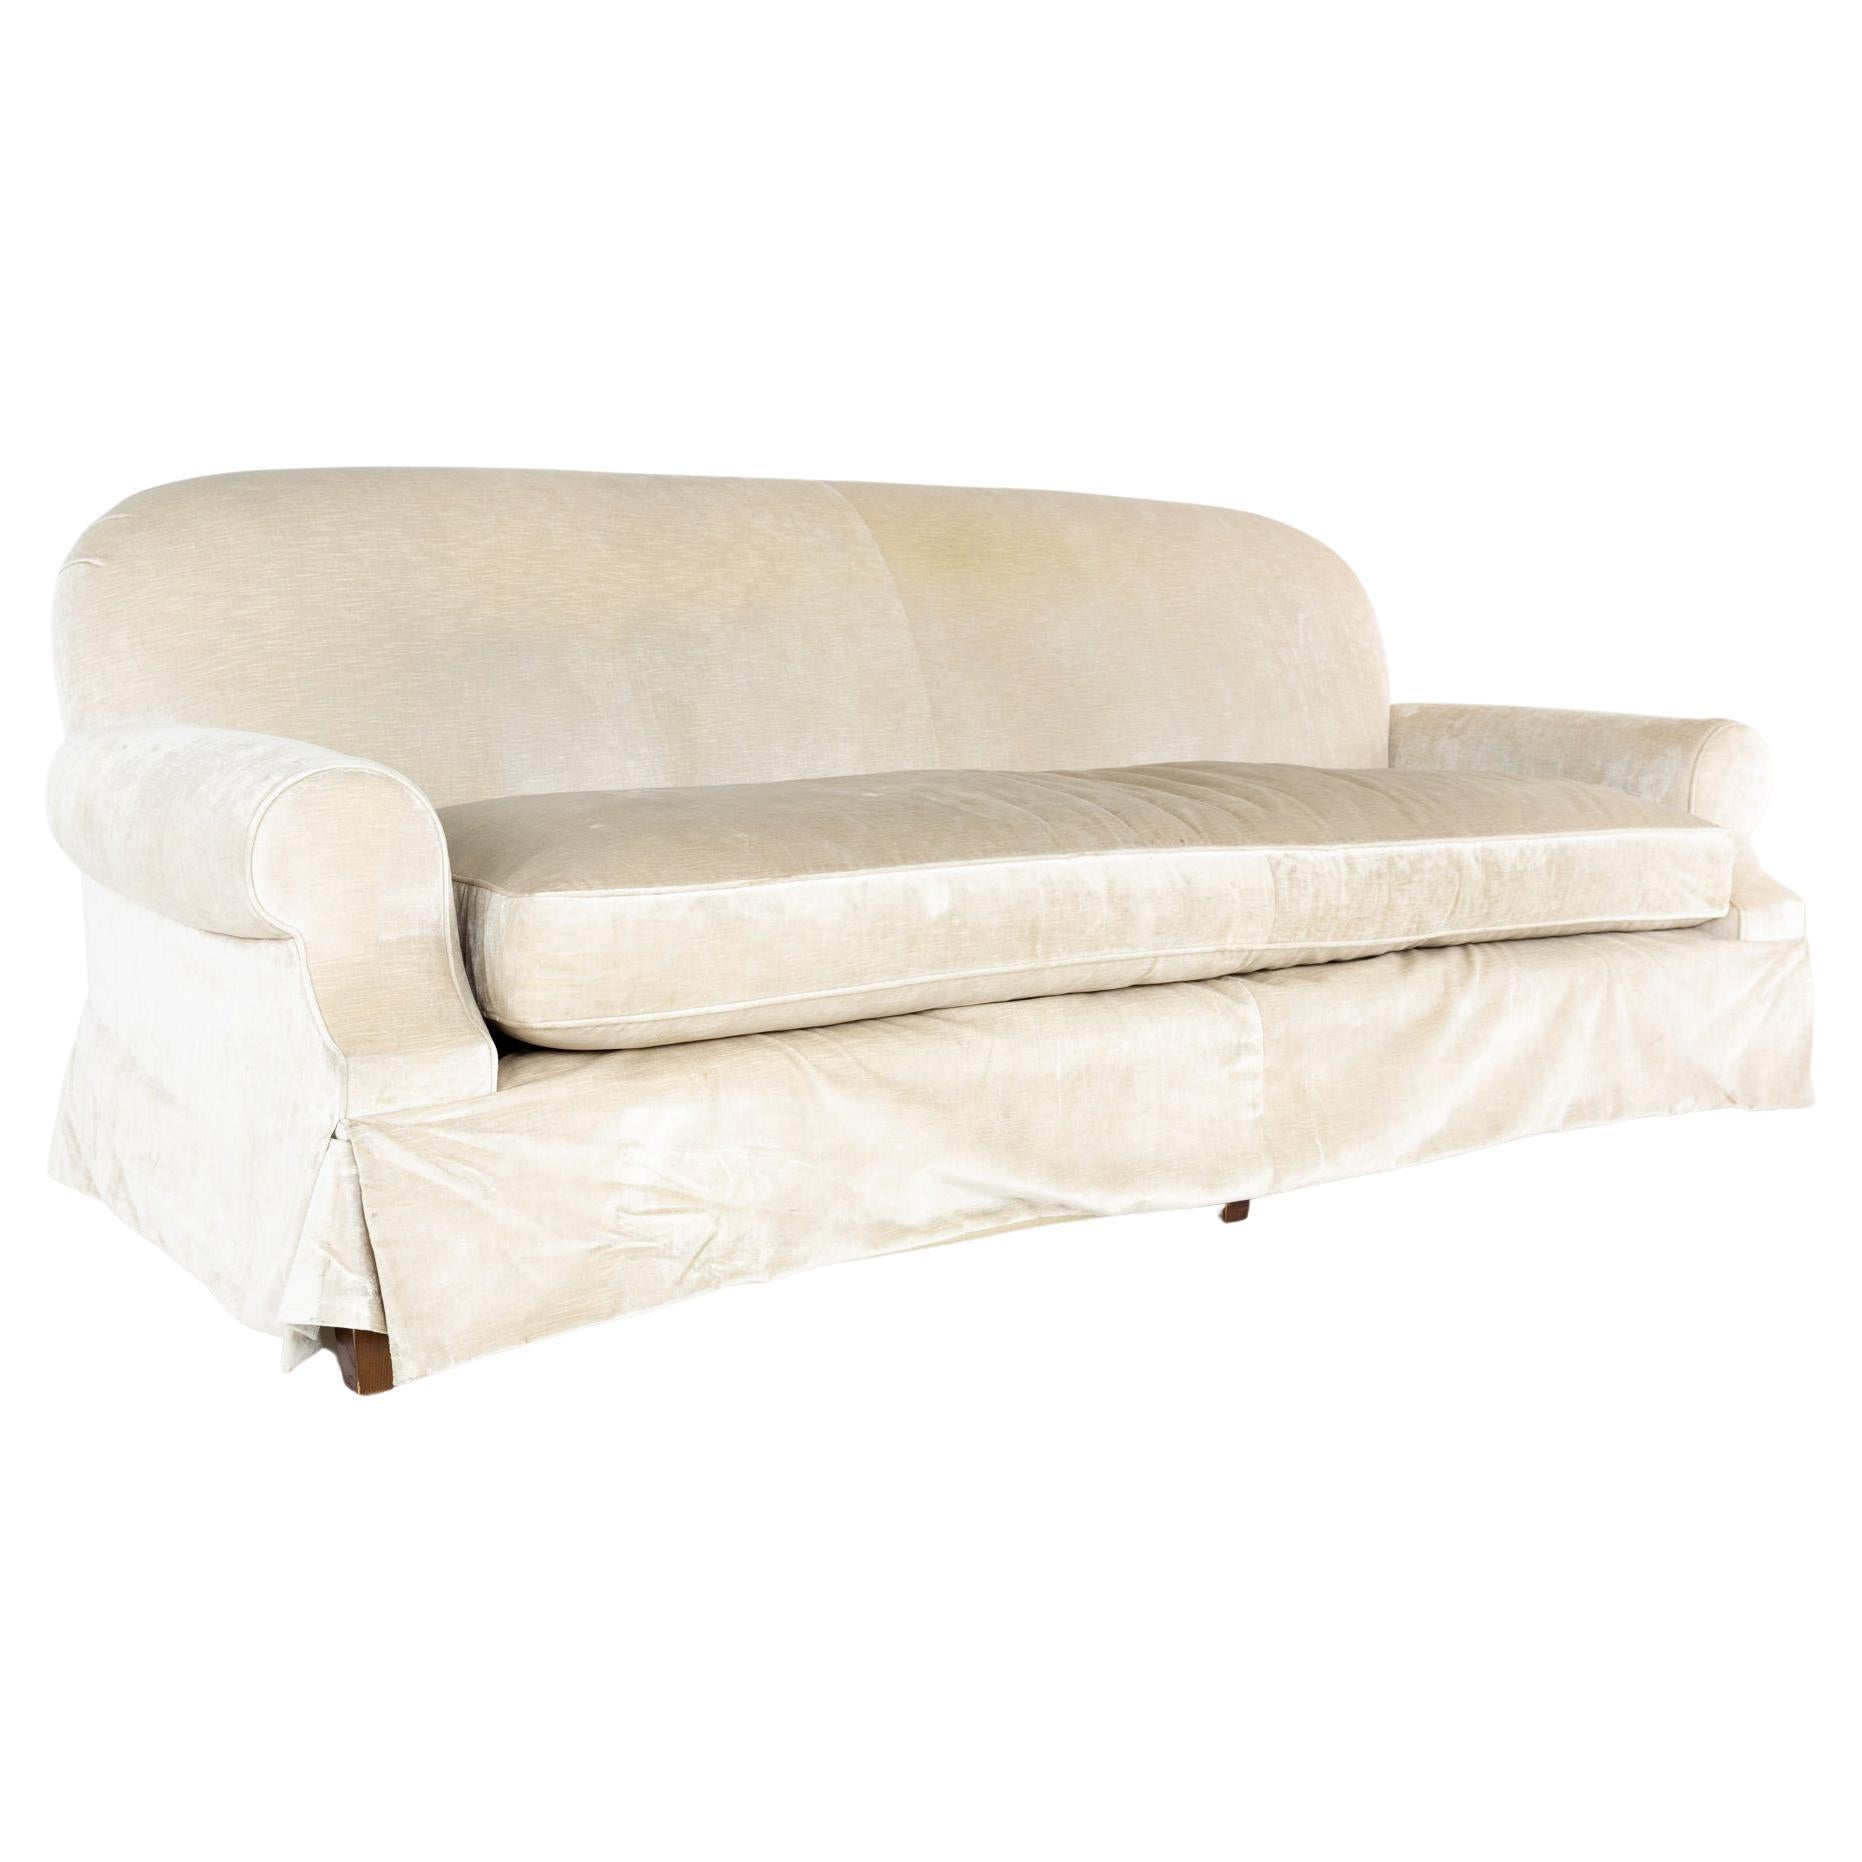 Swaim Contemporary Cream Colored Sofa in Mohair For Sale